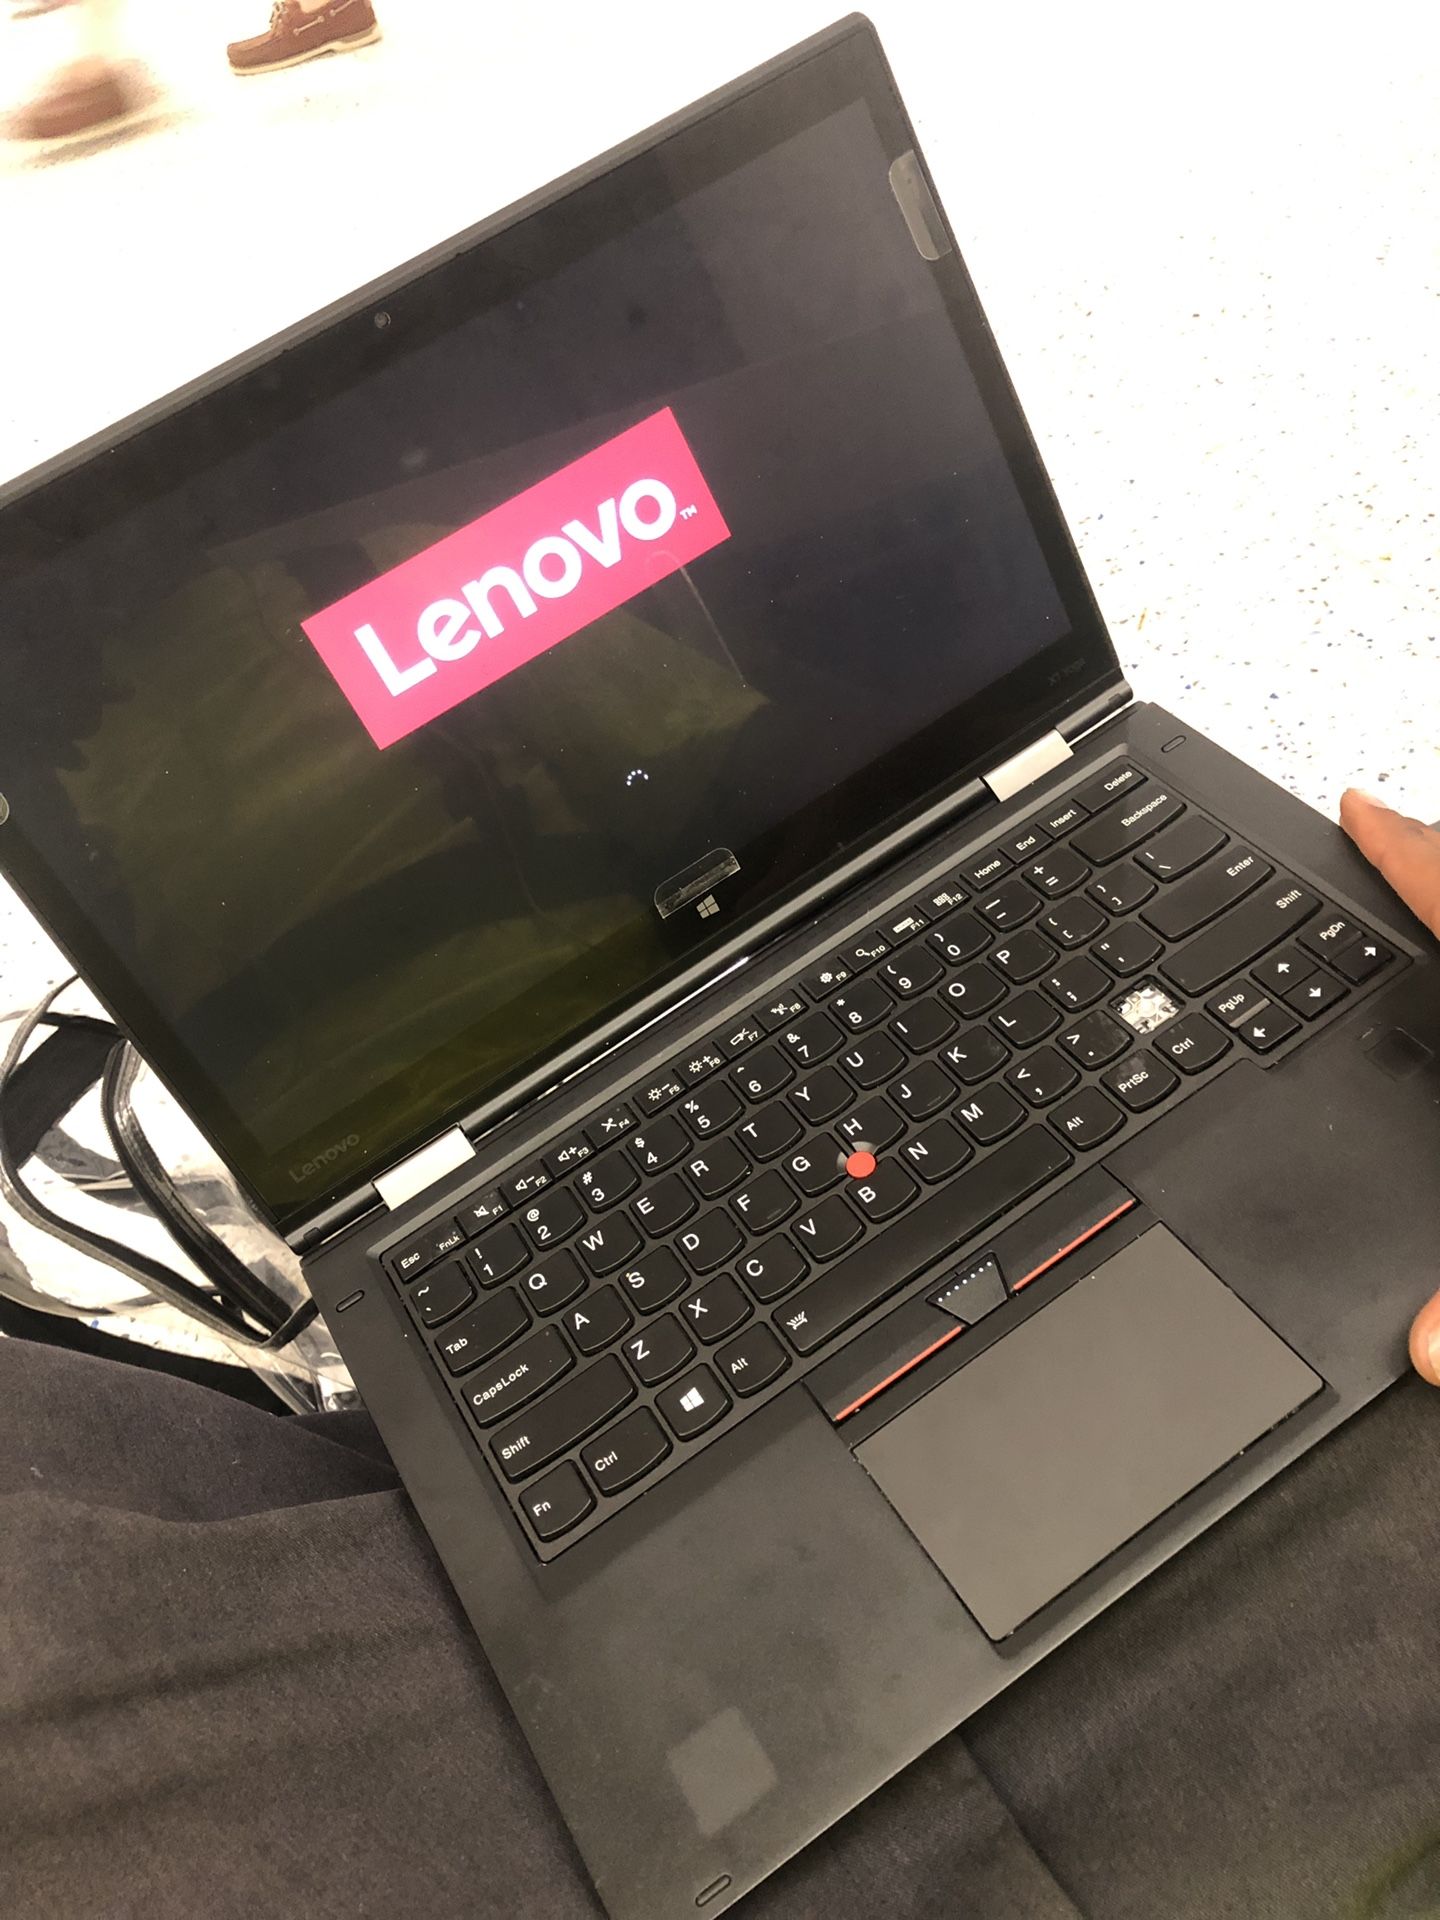 Lenovo touch screen laptop